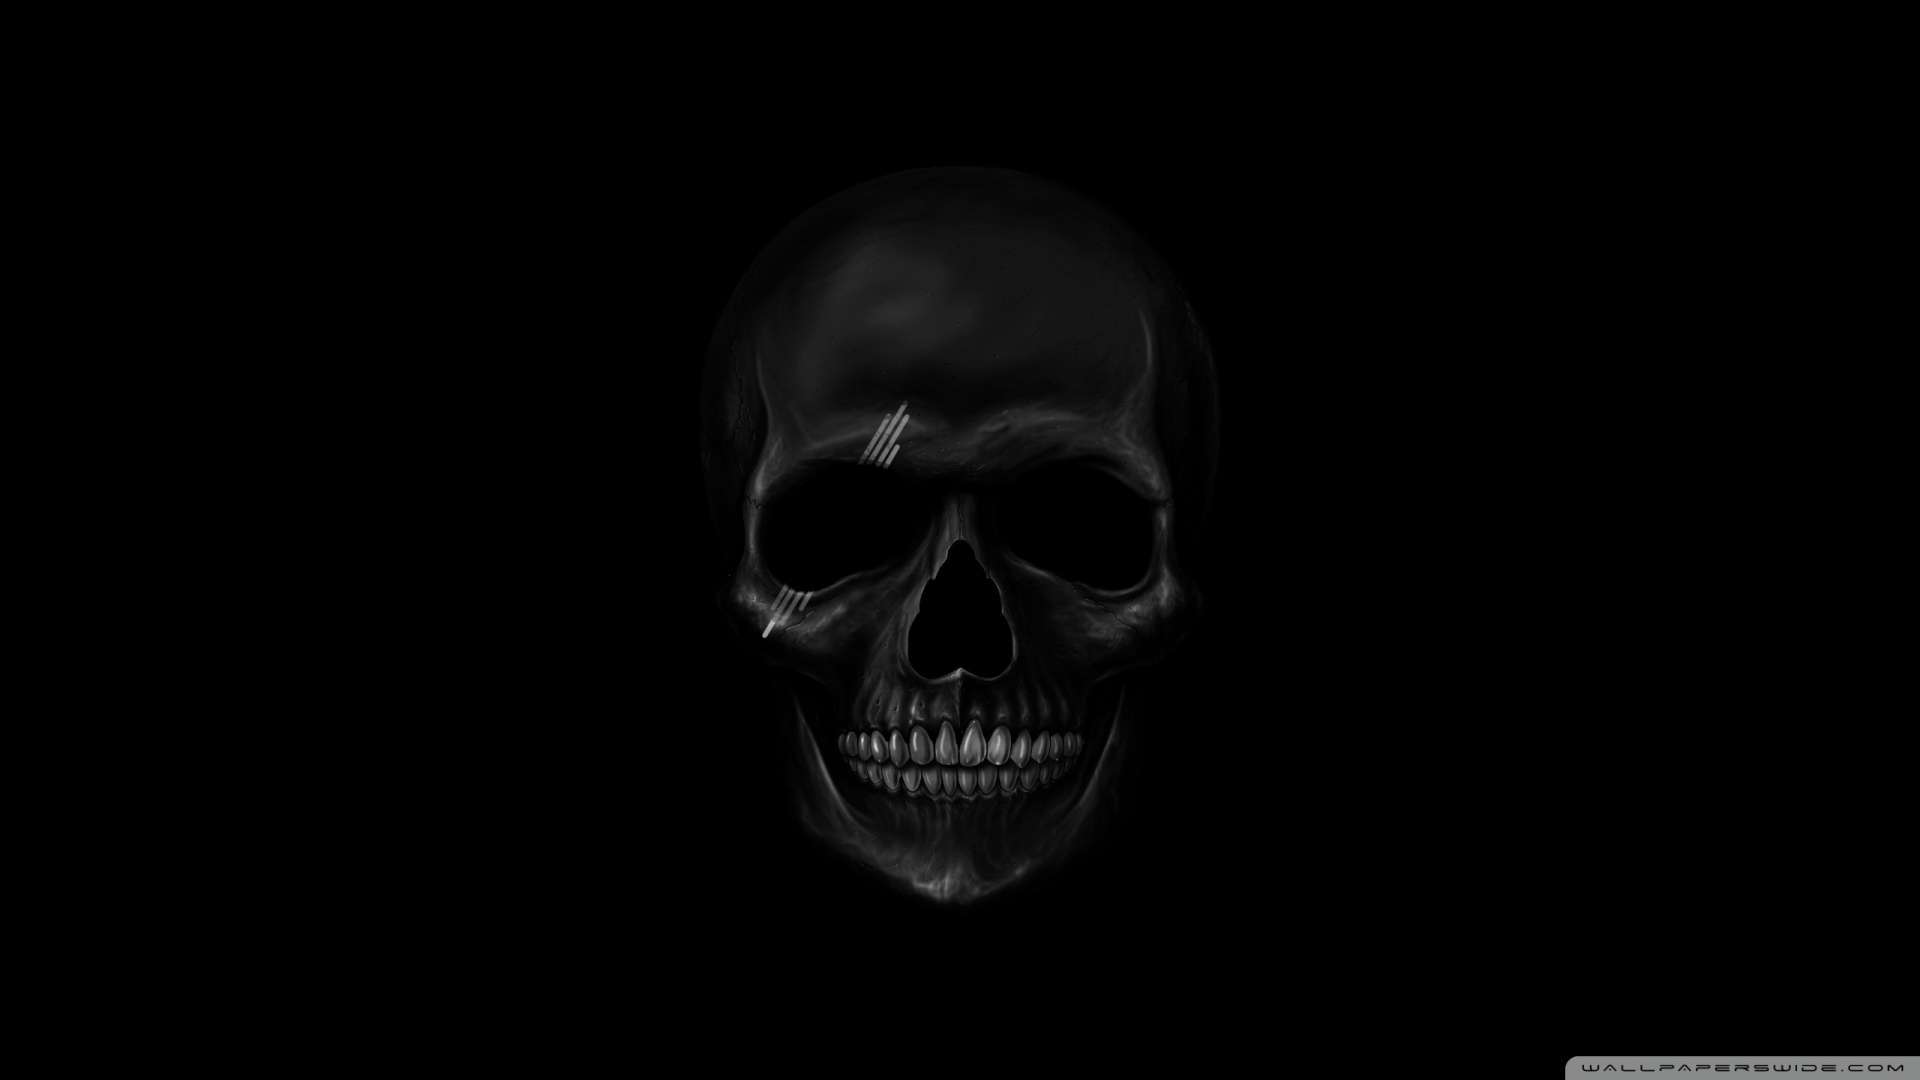 Skull Wallpaper Hd 1080p Free Download For Mobile